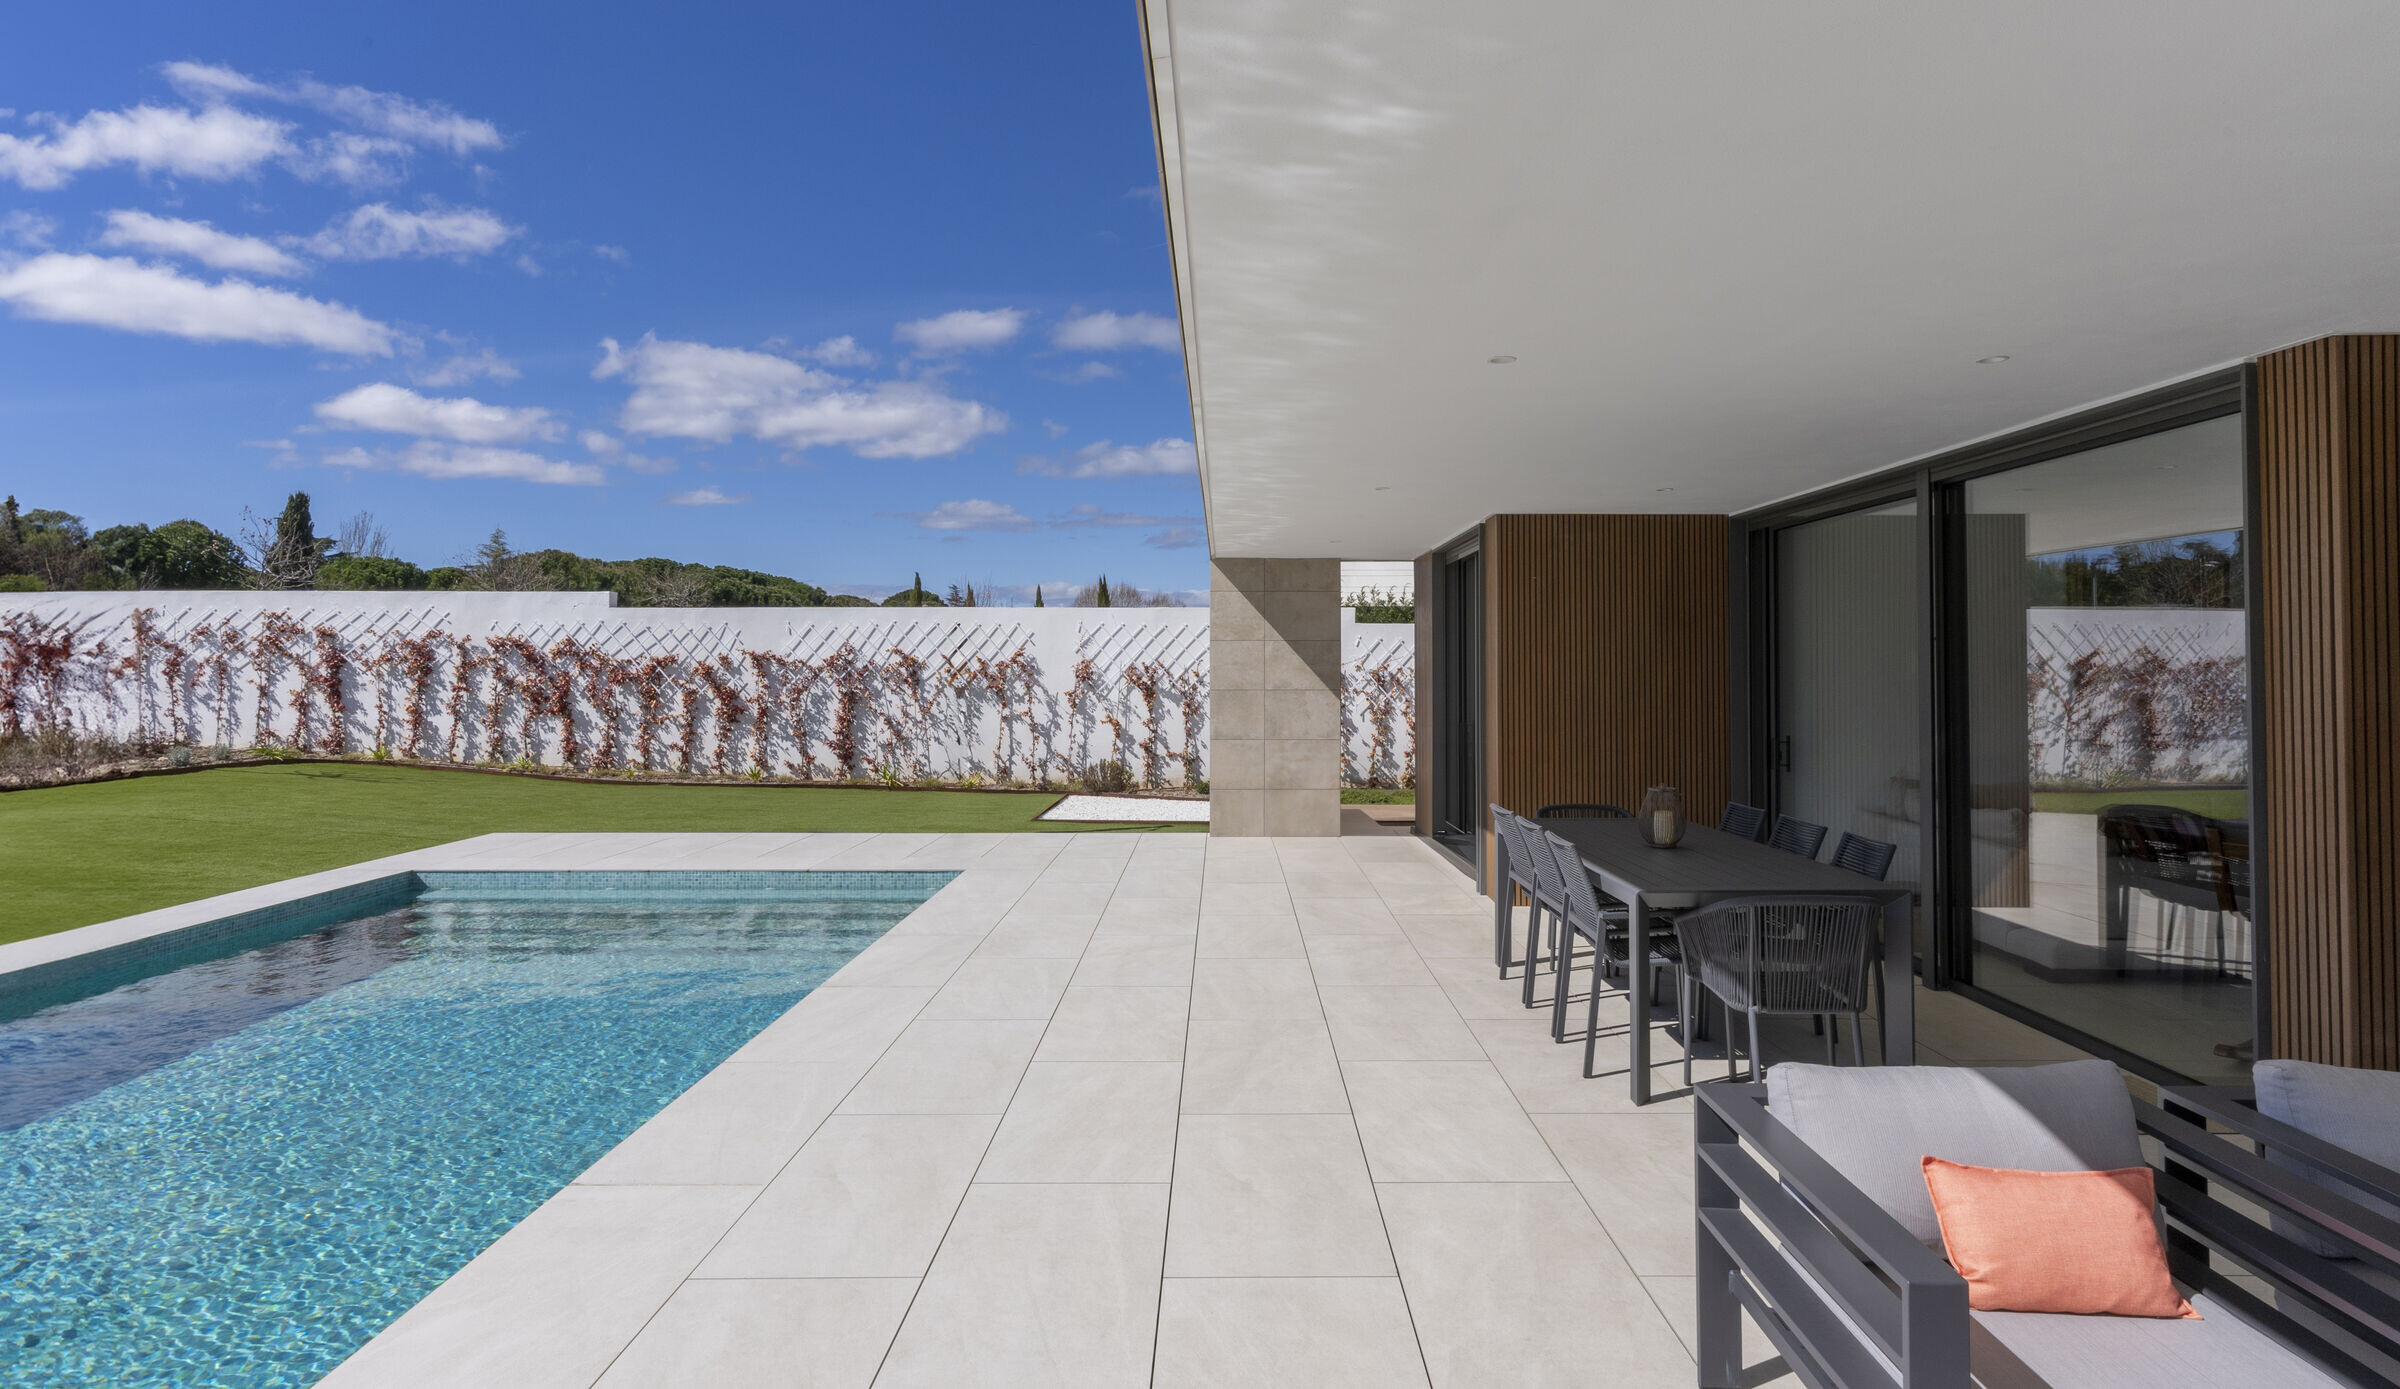 photo_credit Casas inHAUS | Luxury prefabricated house in Madrid